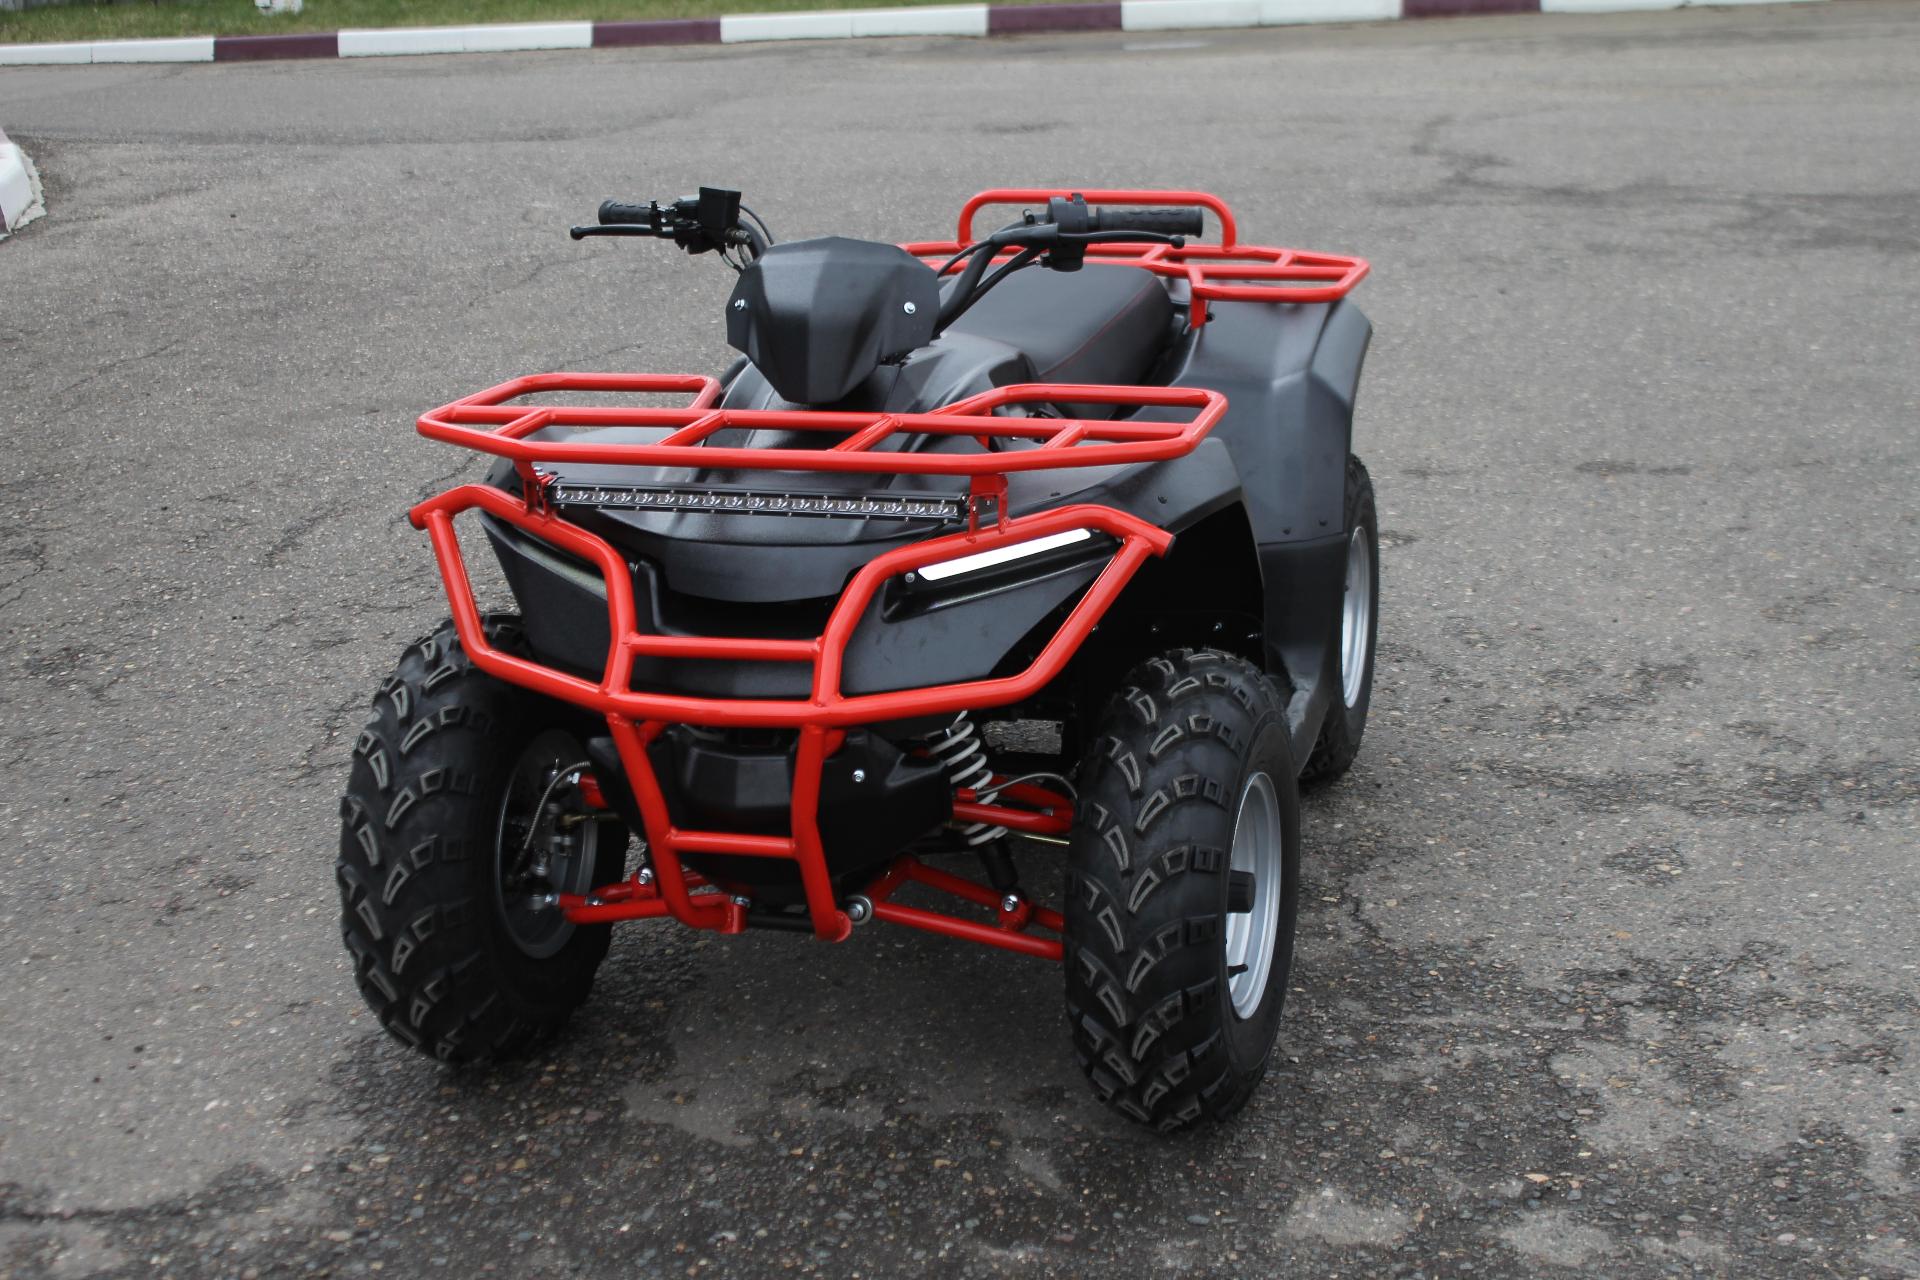 Квадроцикл Irbis (Ирбис) ATV 200 U — обзор и характеристики модели